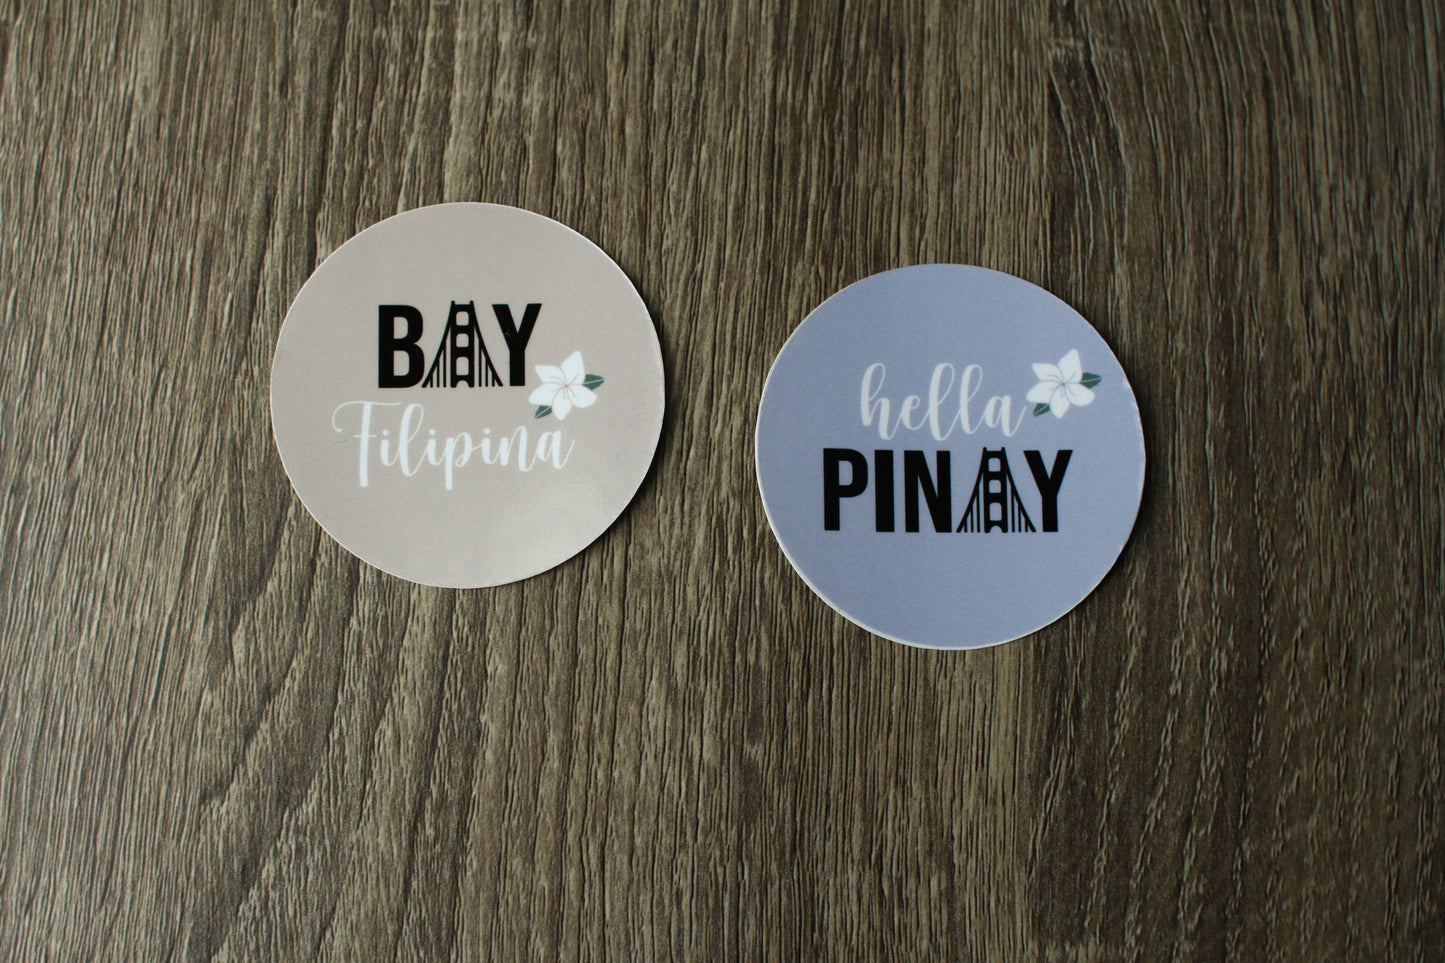 Bay Filipina Sticker